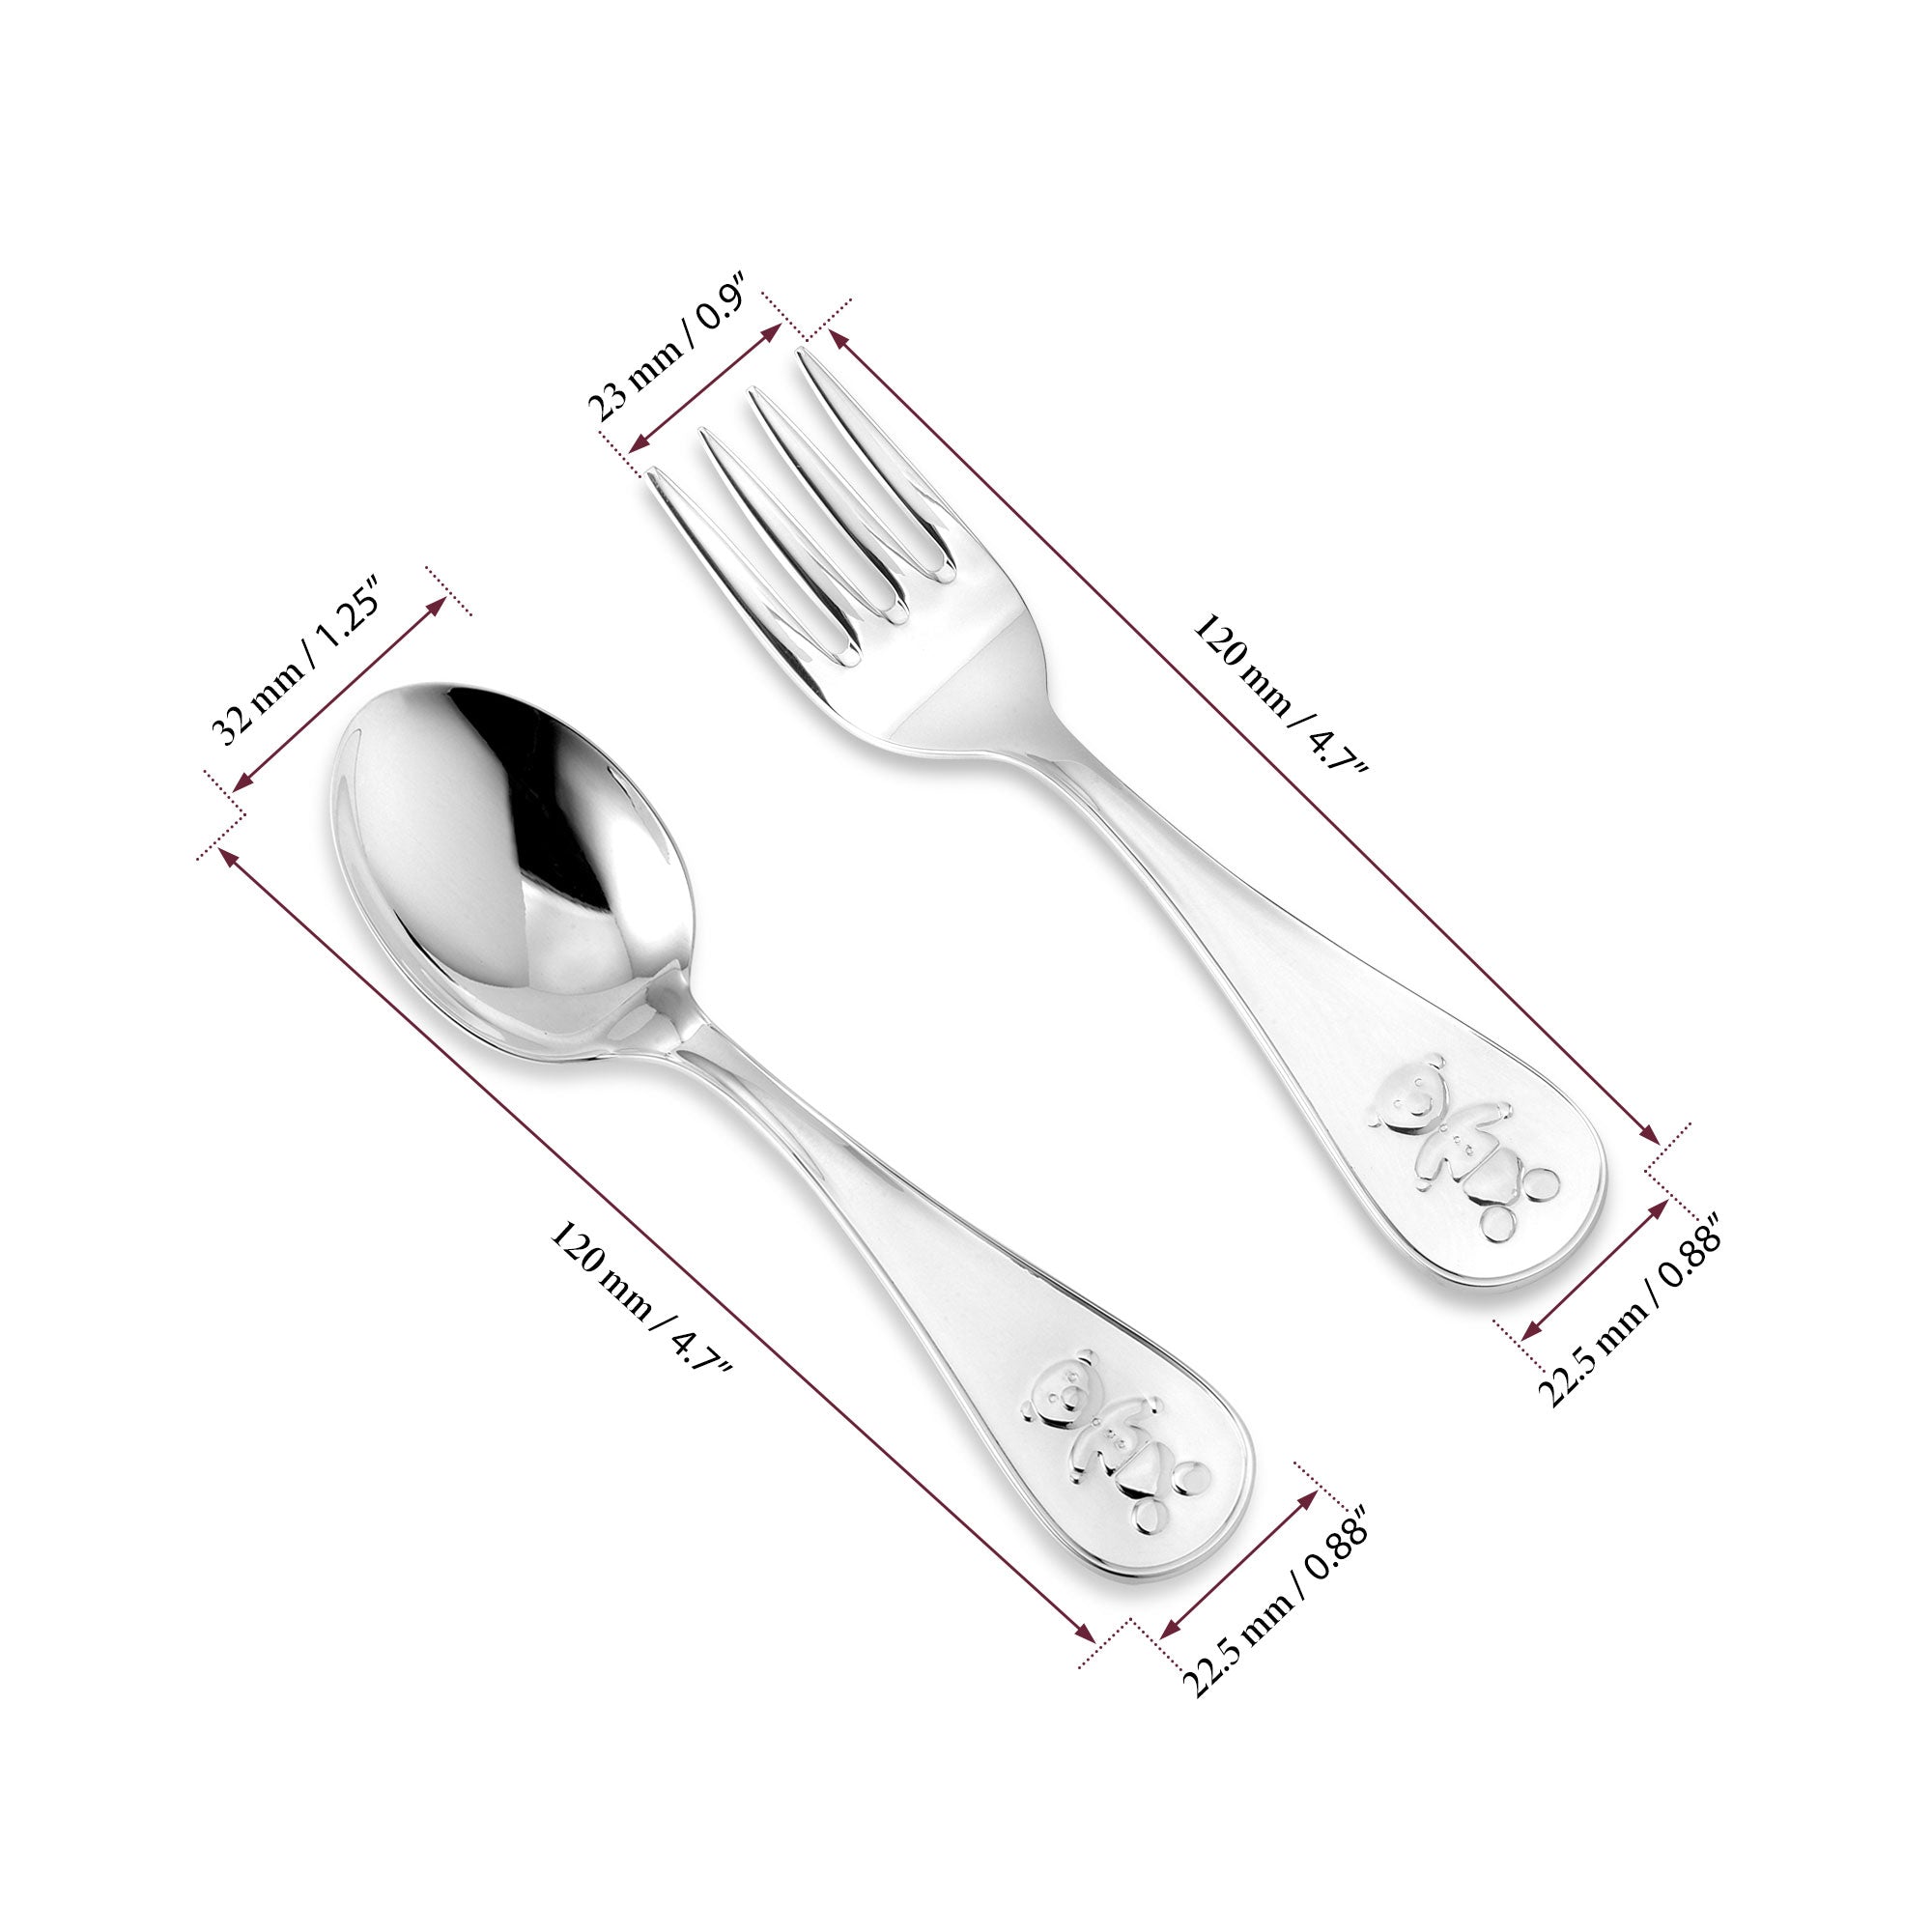 Sterling Silver 925 Baby Spoon and Fork Set Wide Keepsake Teddy Bear Design